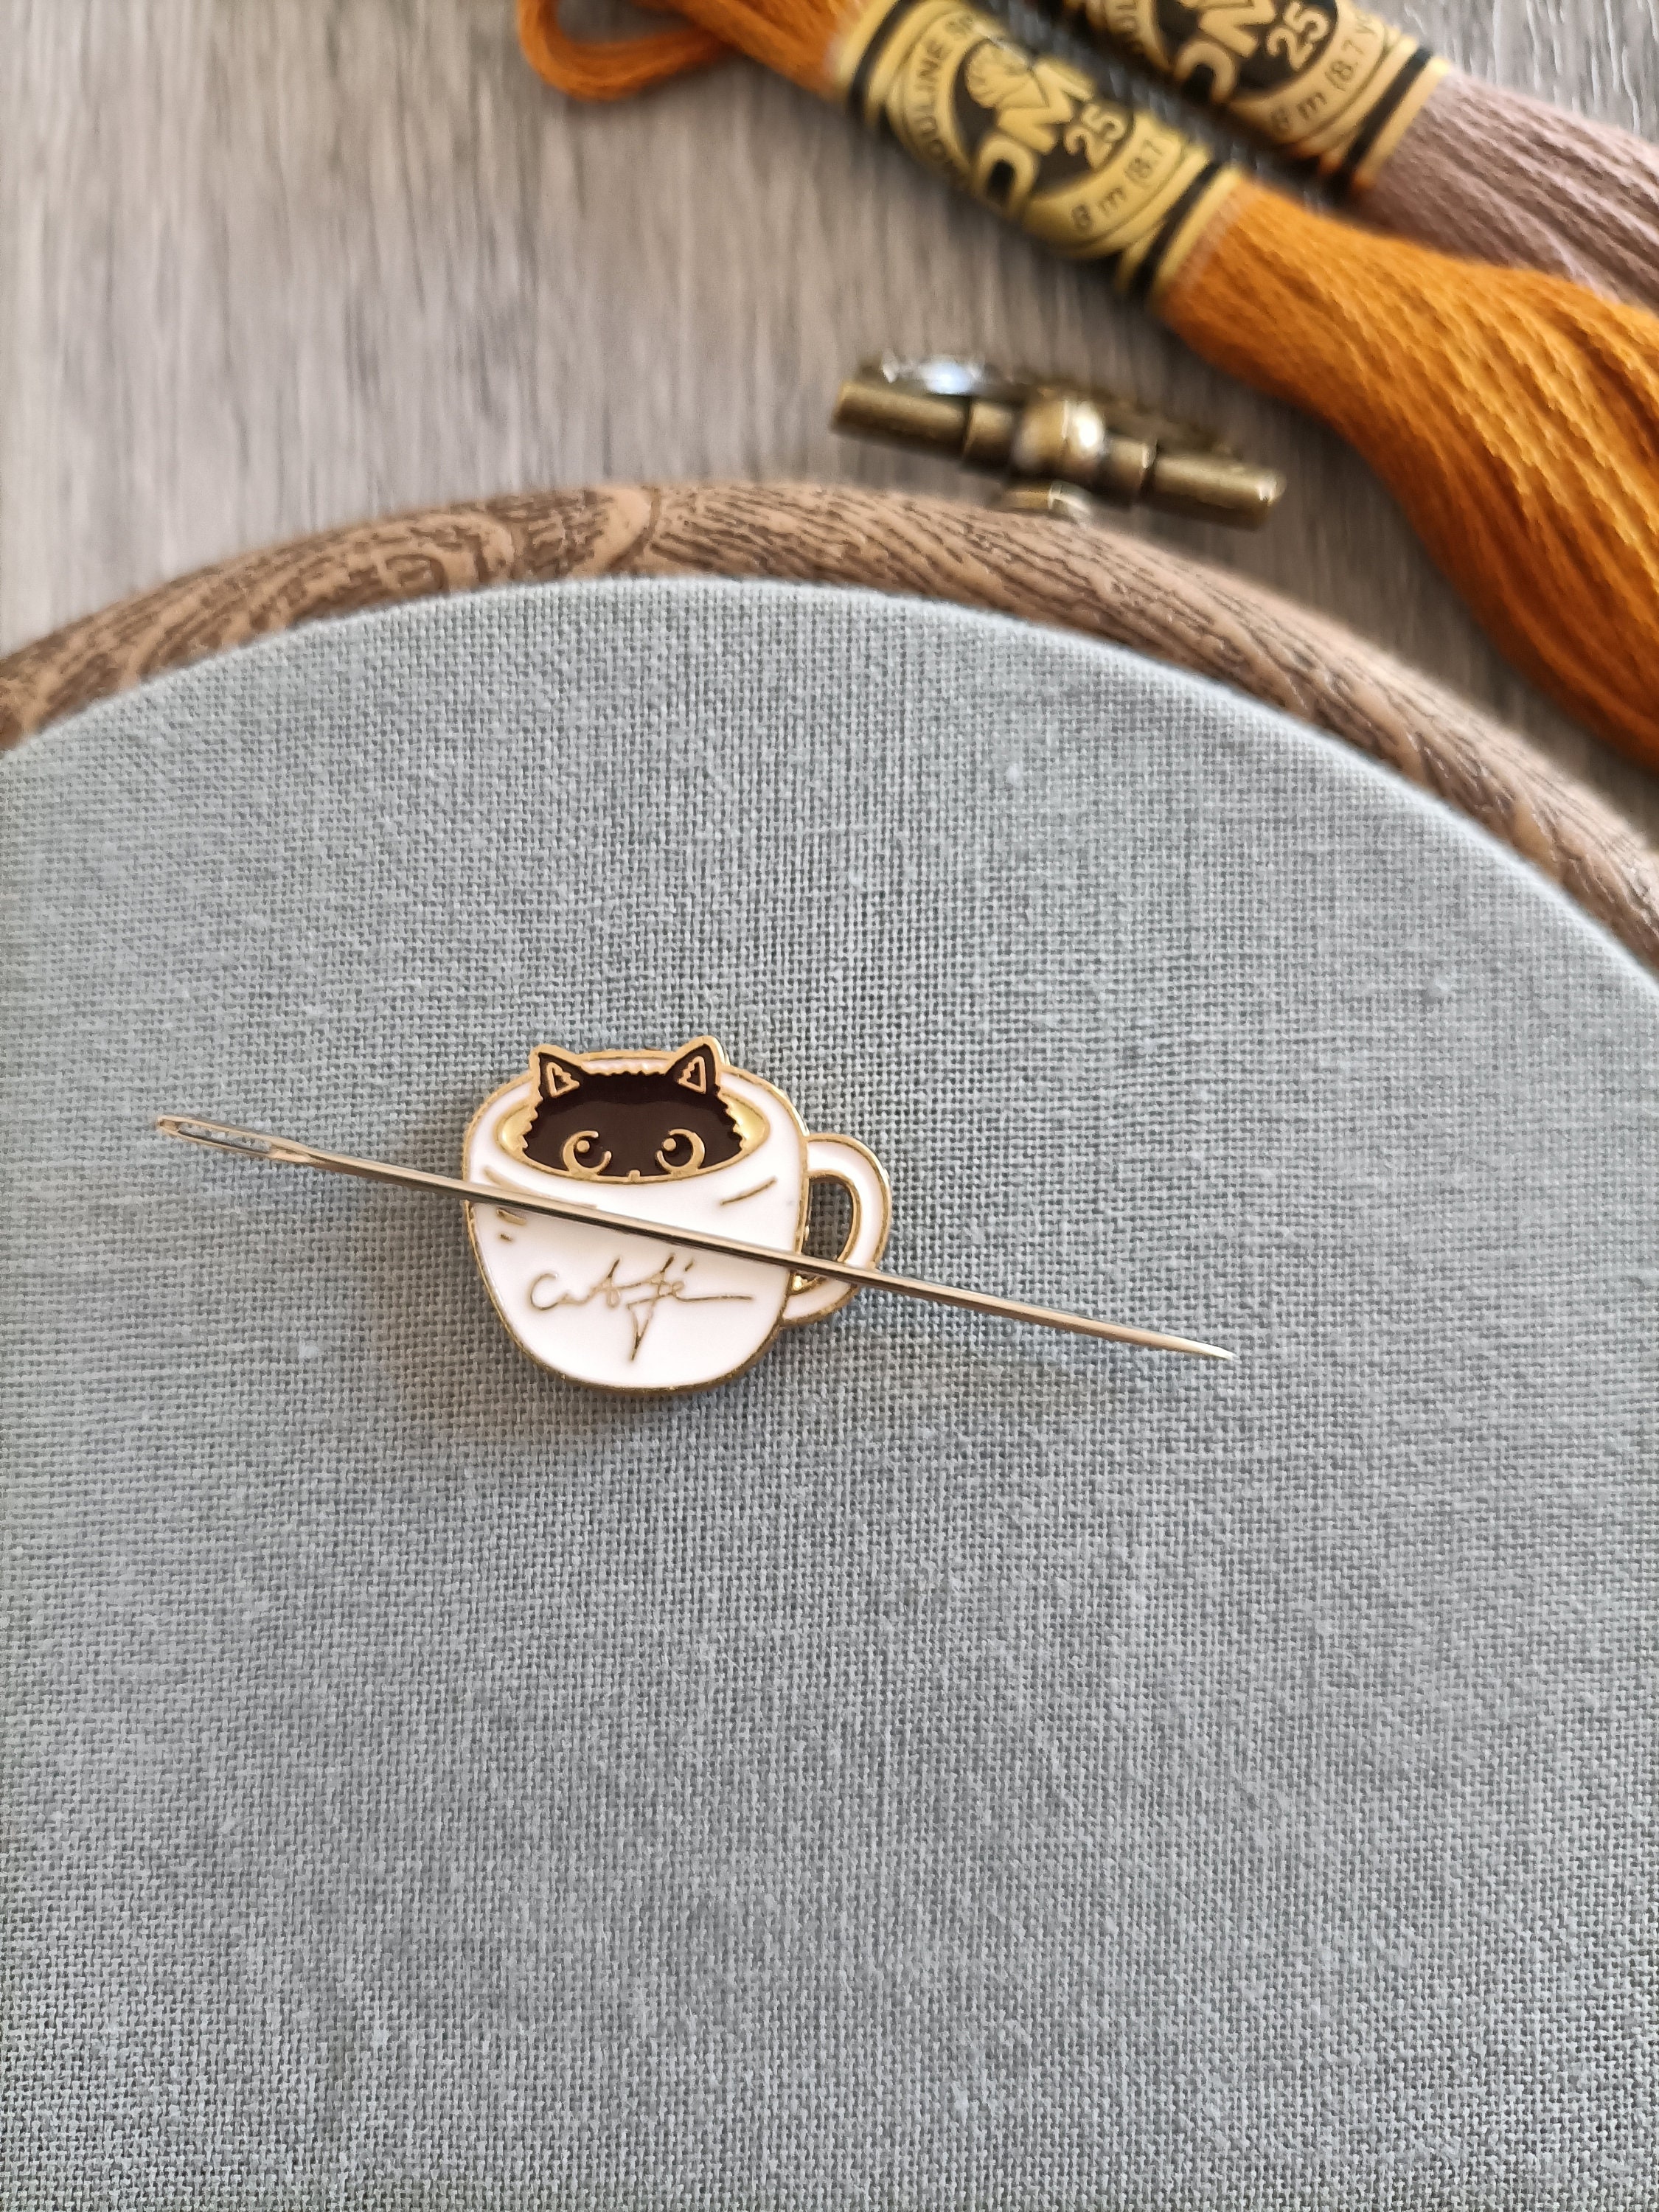 4pcs Needle Minder for Cross Stitch,Sewing Magnetic Needle Keeper,Cute Cat&Rabbit Cartoon Enamel Pin,Needle Holder for Embroidery,Needlework Storage